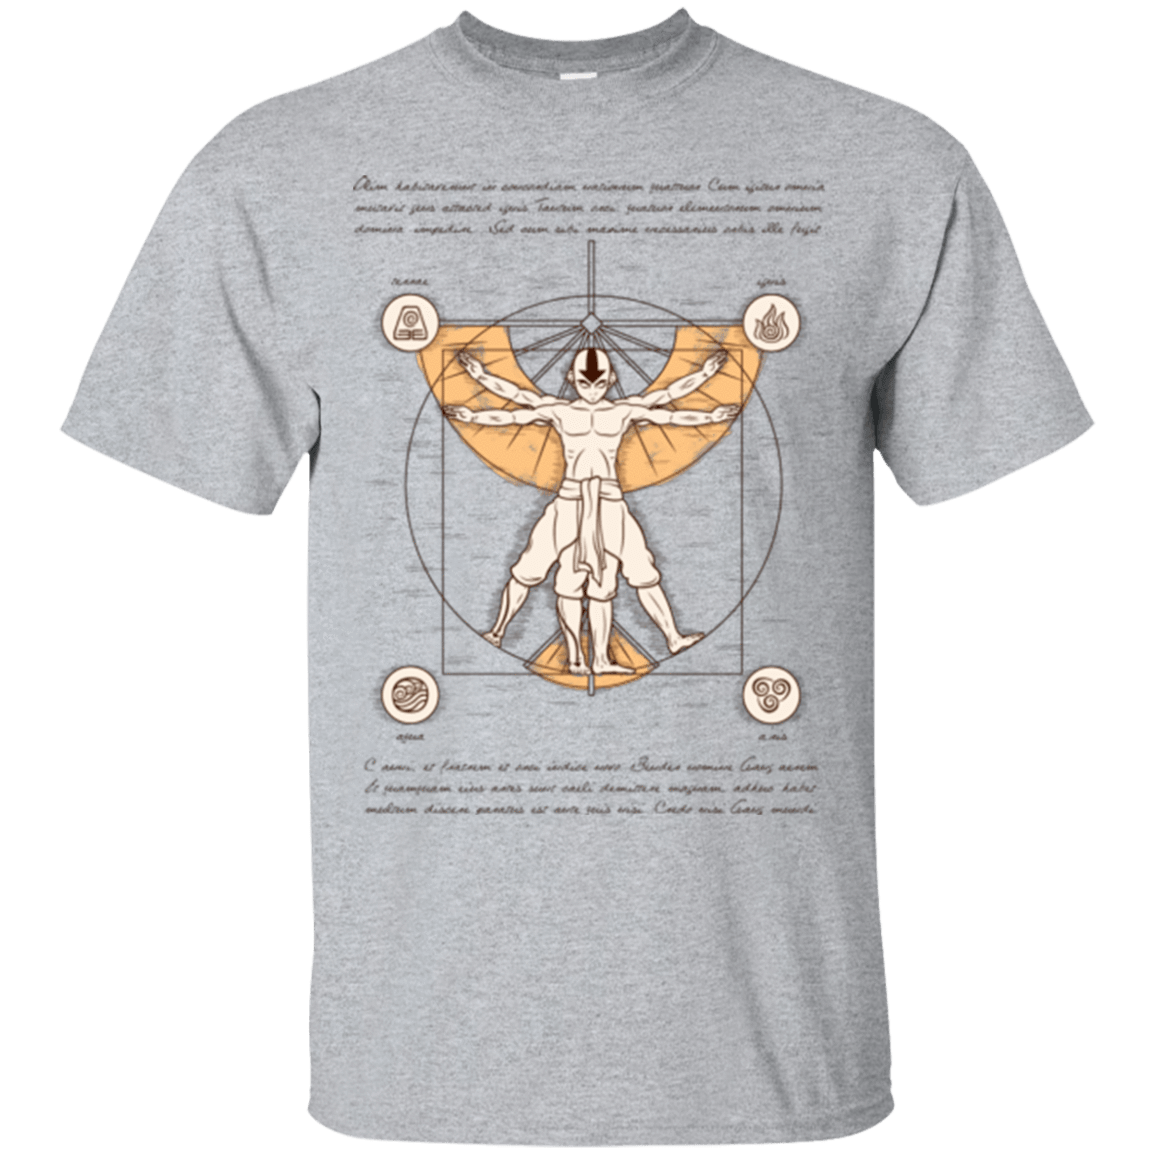 T-Shirts Sport Grey / Small Vitruvian Aang T-Shirt